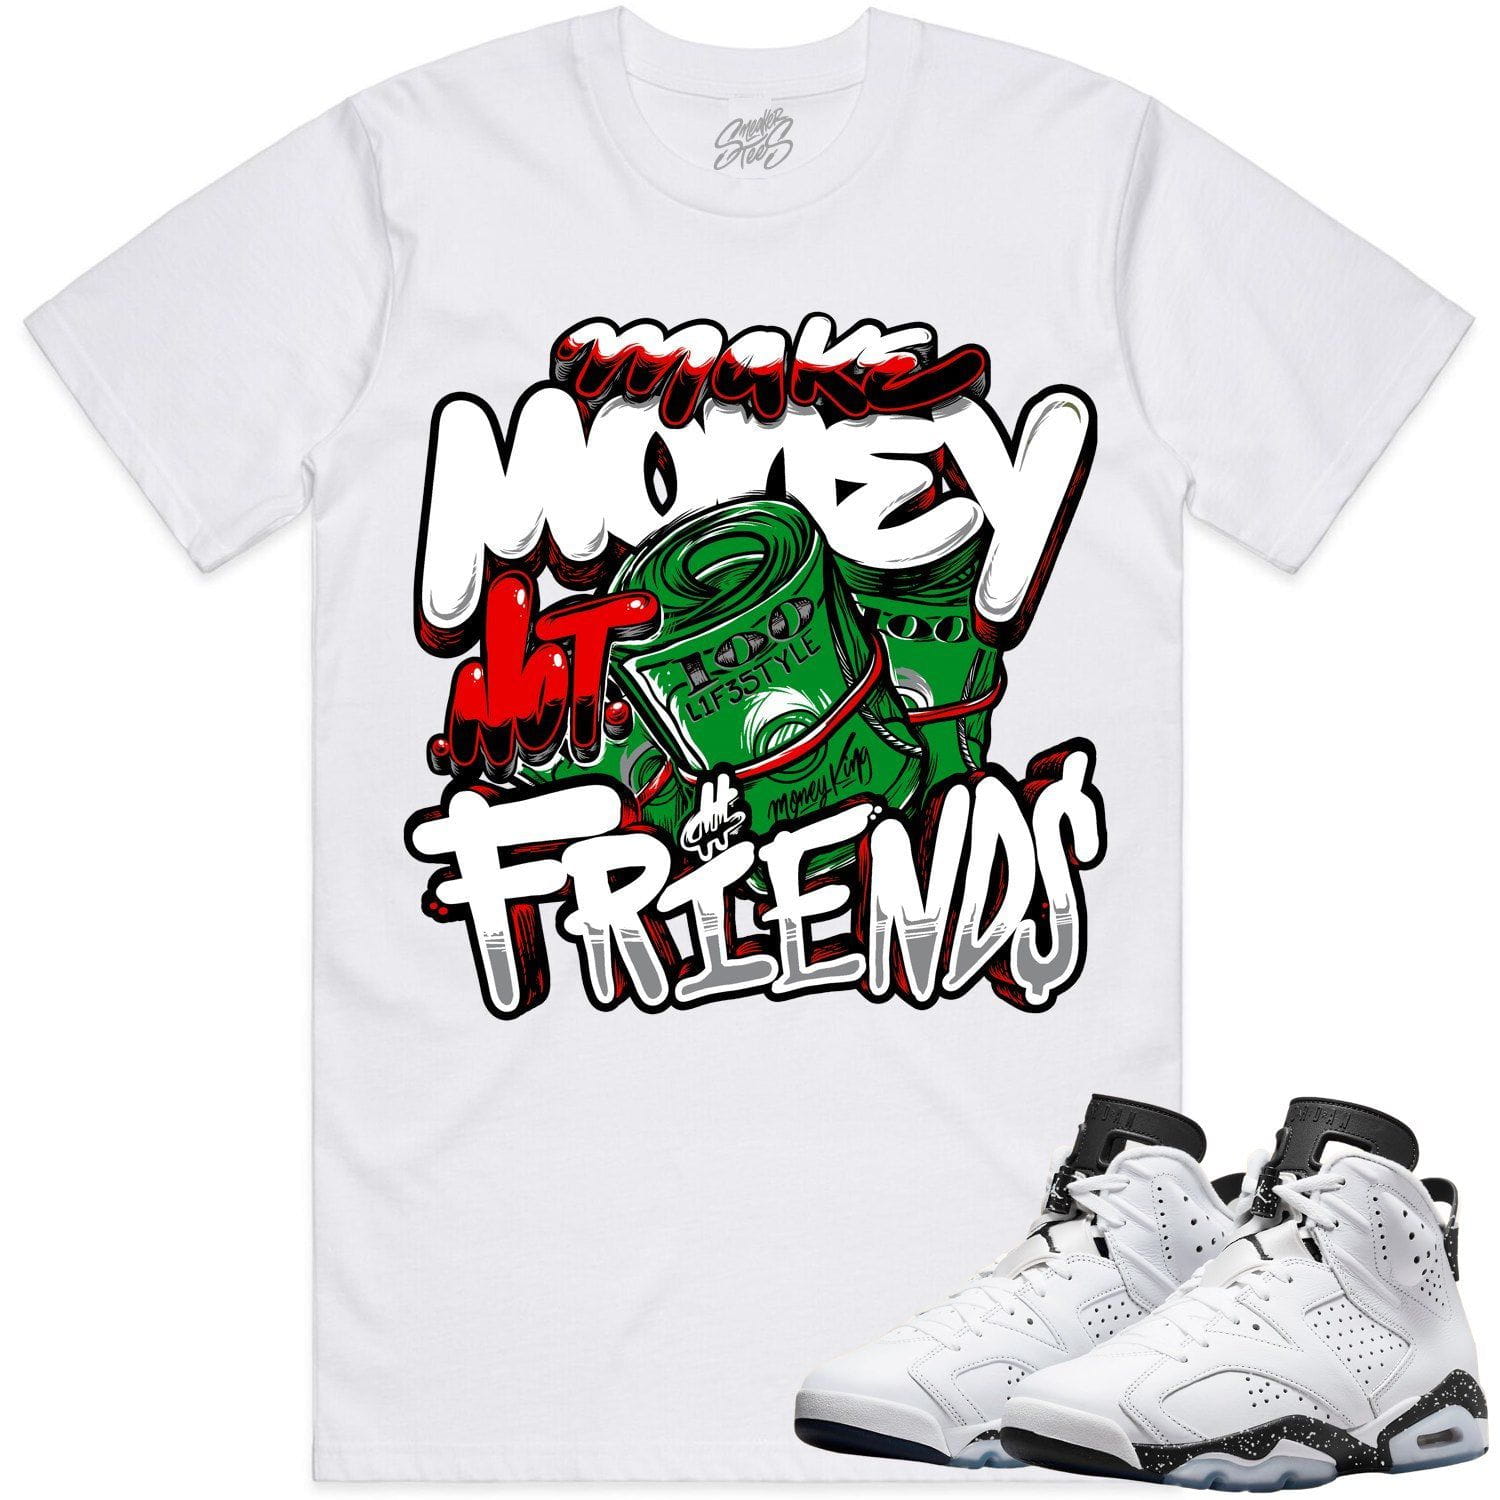 Oreo 6s Shirts - Jordan 6 Reverse Oreo 6s Sneaker Tees - Make Money